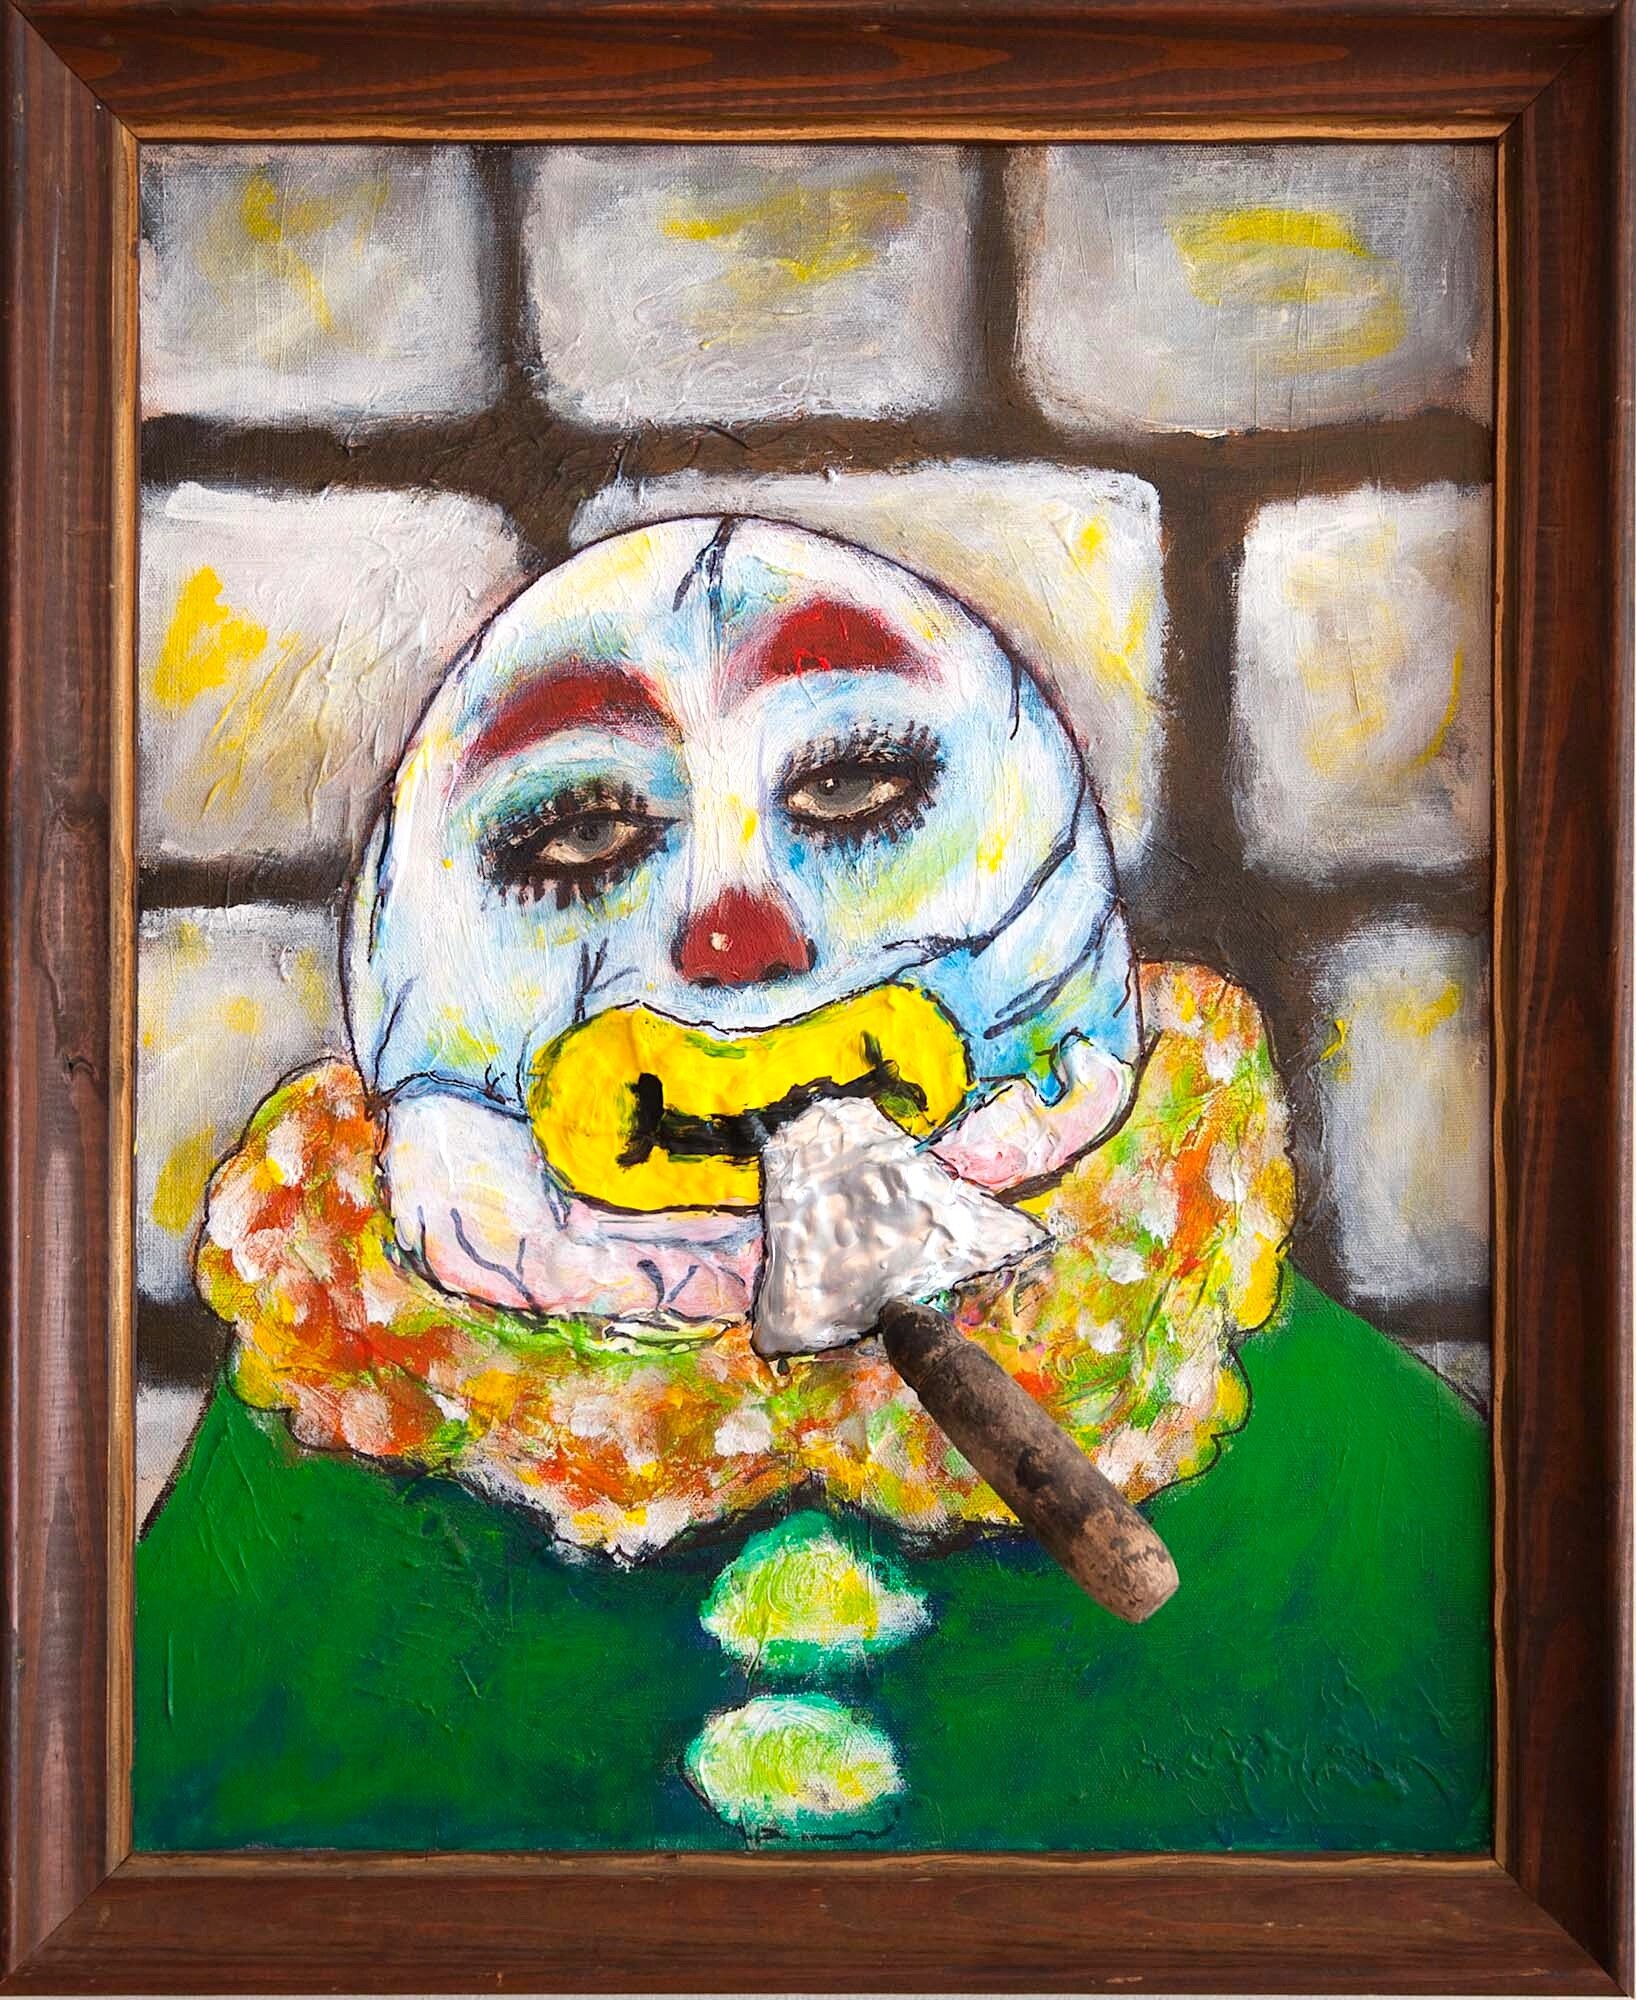 Humpty Dumpty, 2014. Oil, acrylic, trowel on canvas. 22" x 18".